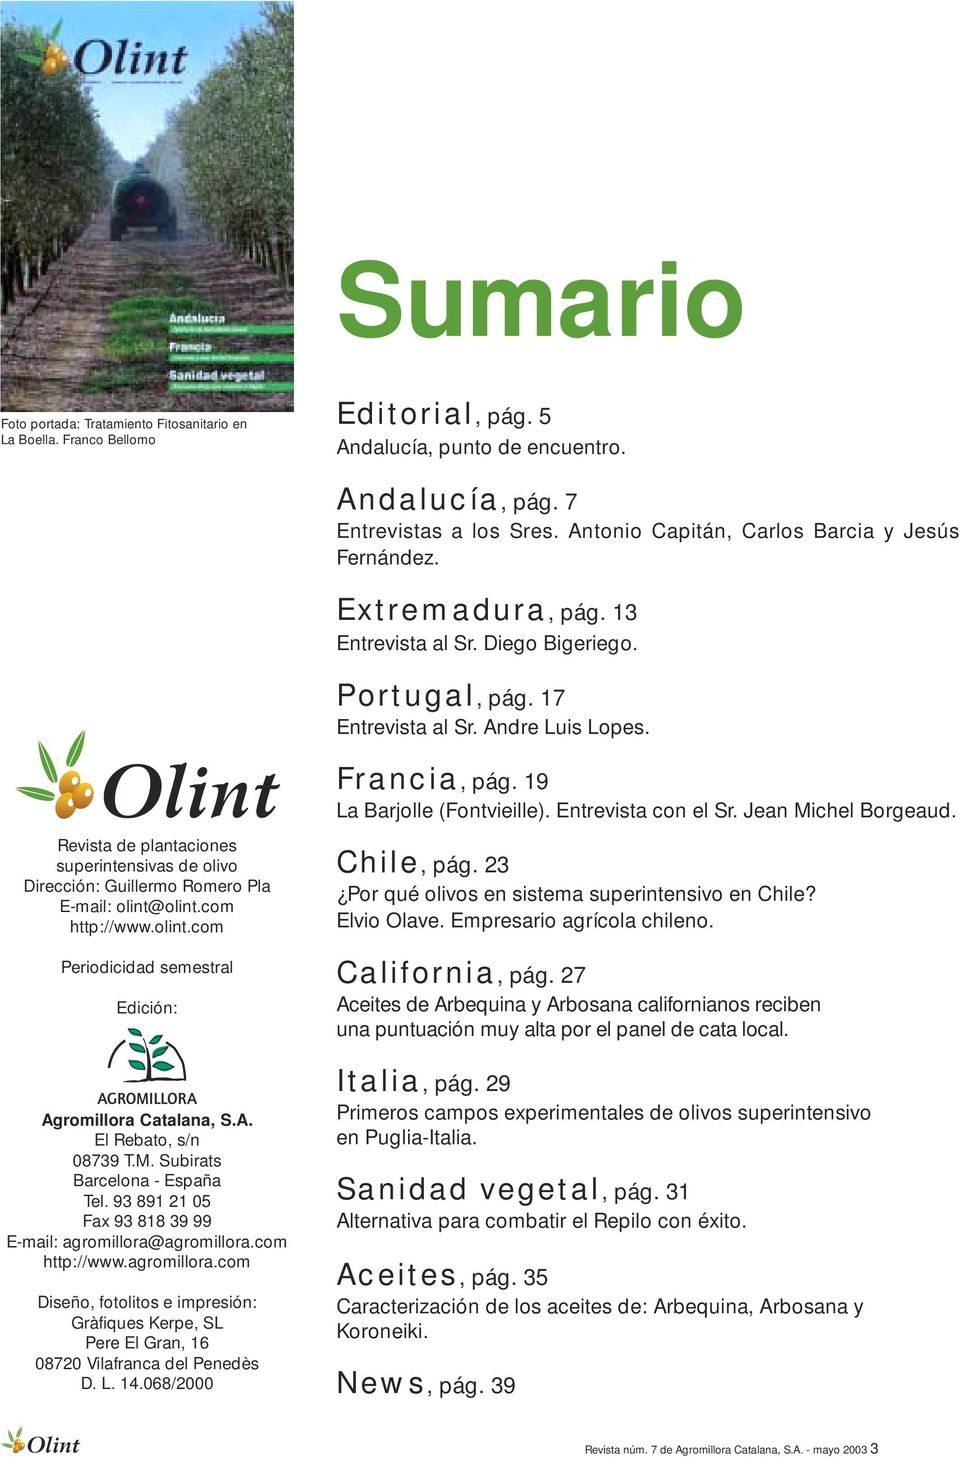 Olint Revista de plantaciones superintensivas de olivo Dirección: Guillermo Romero Pla E-mail: olint@olint.com http://www.olint.com Periodicidad semestral Edición: Agromillora Catalana, S.A. El Rebato, s/n 08739 T.